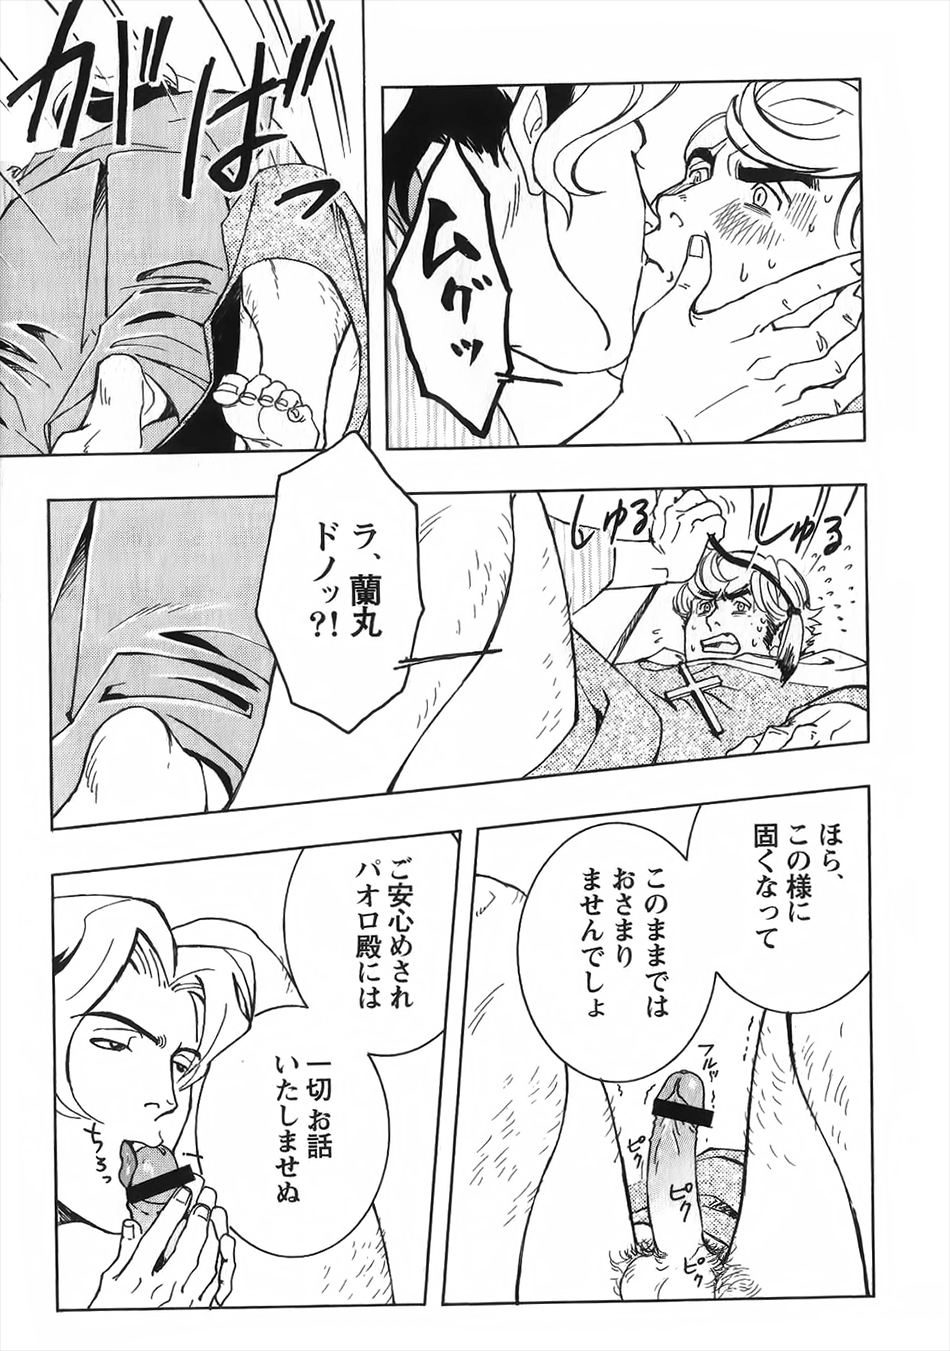 [Zin] Nobunaga's lotion man [RAW] [JAP] 